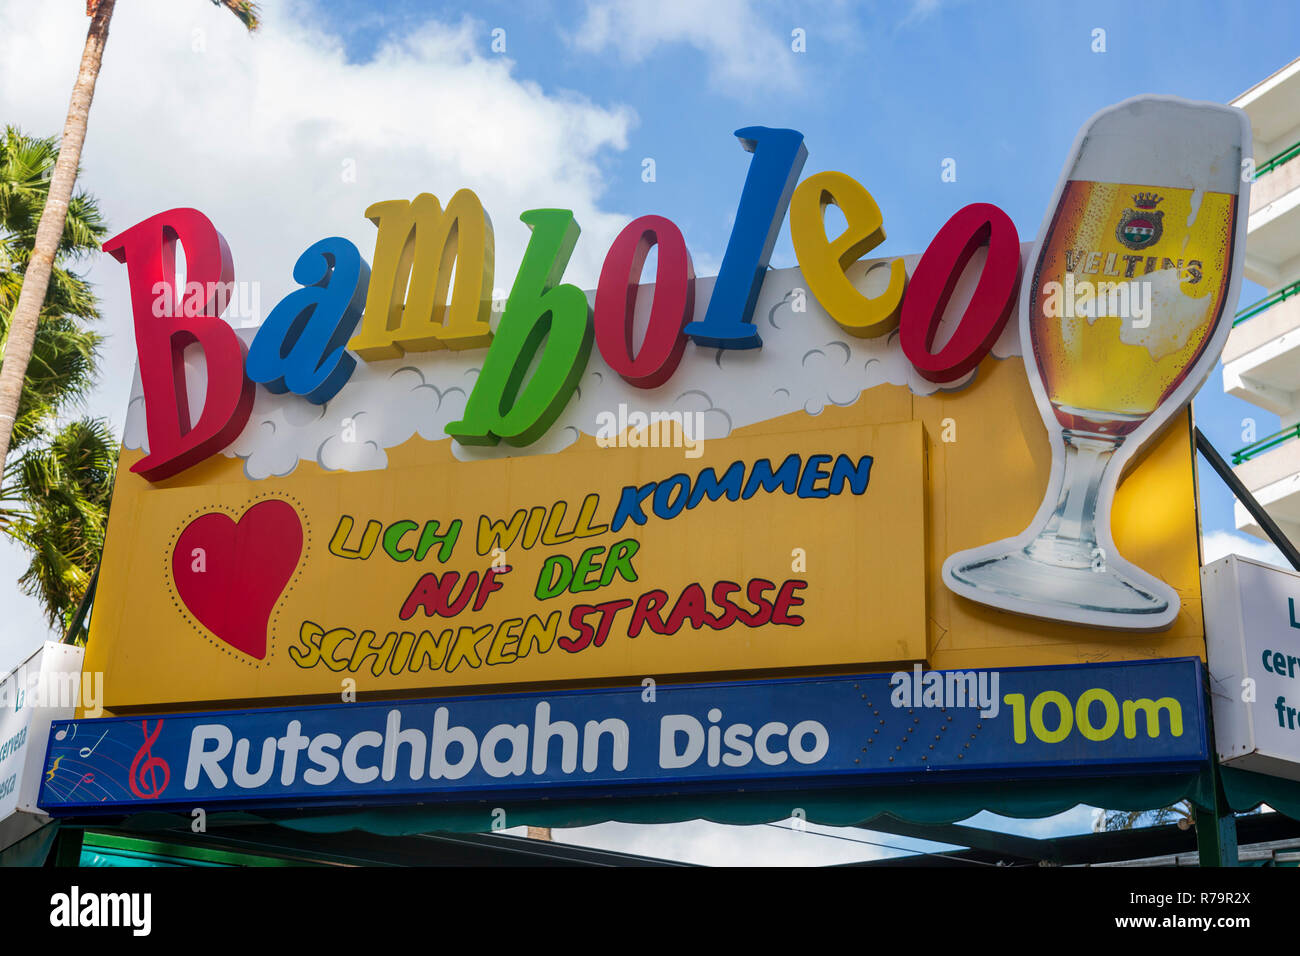 Bamboleo Diskothek in der schinkenstrasse der sogenannten Ballermann Gegend von Playa de Palma, Platja de Palma, Mallorca, Mallorca, Balearen, Spanien, Europa Stockfoto